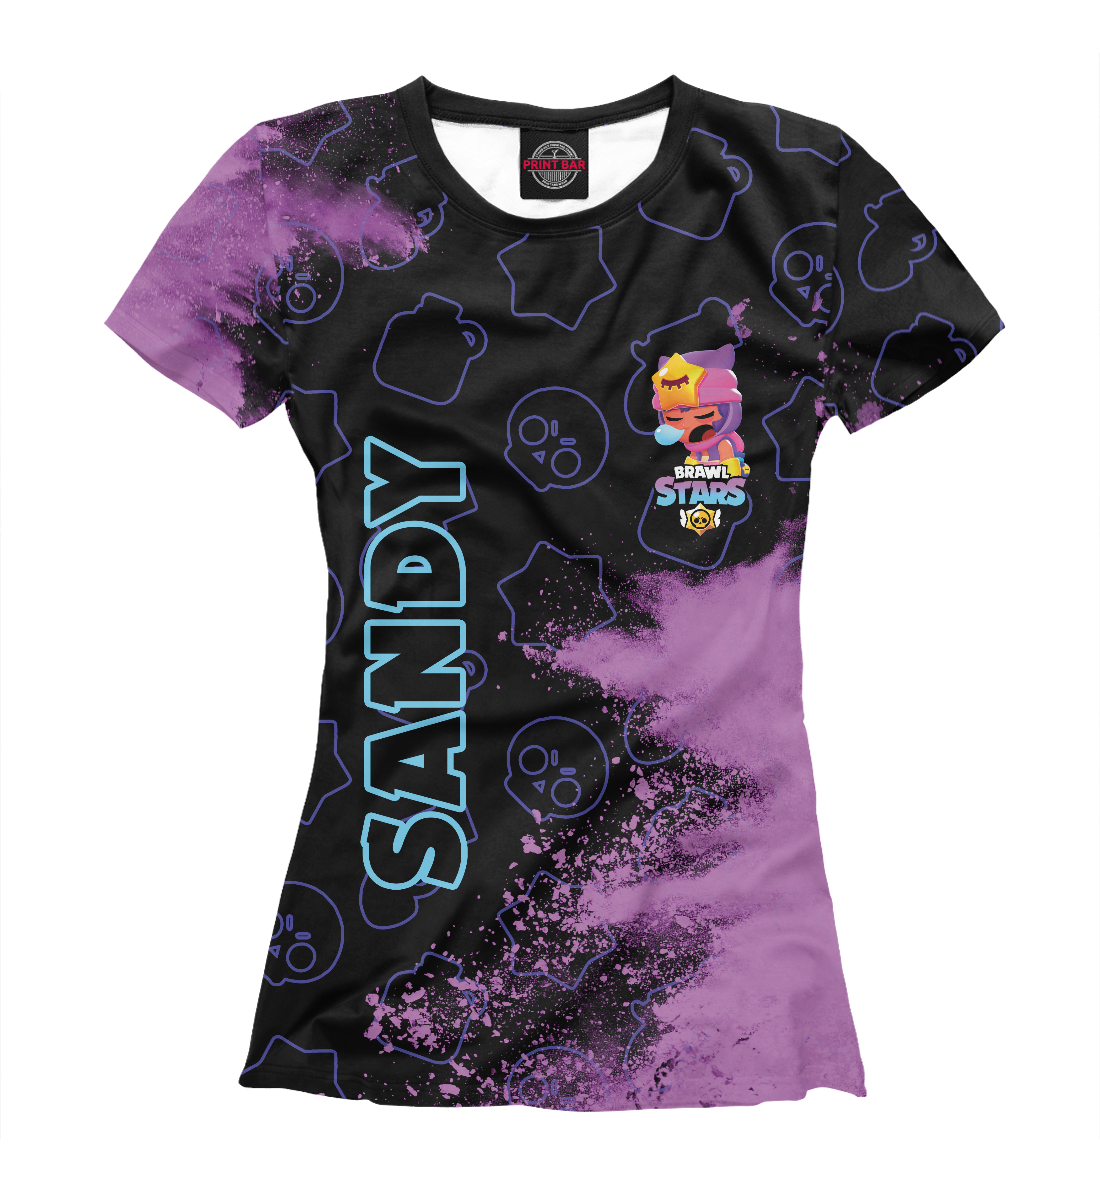 Детская Футболка с принтом Brawl Stars Sandy / Сэнди для девочек, артикул CLH-645246-fut-1mp